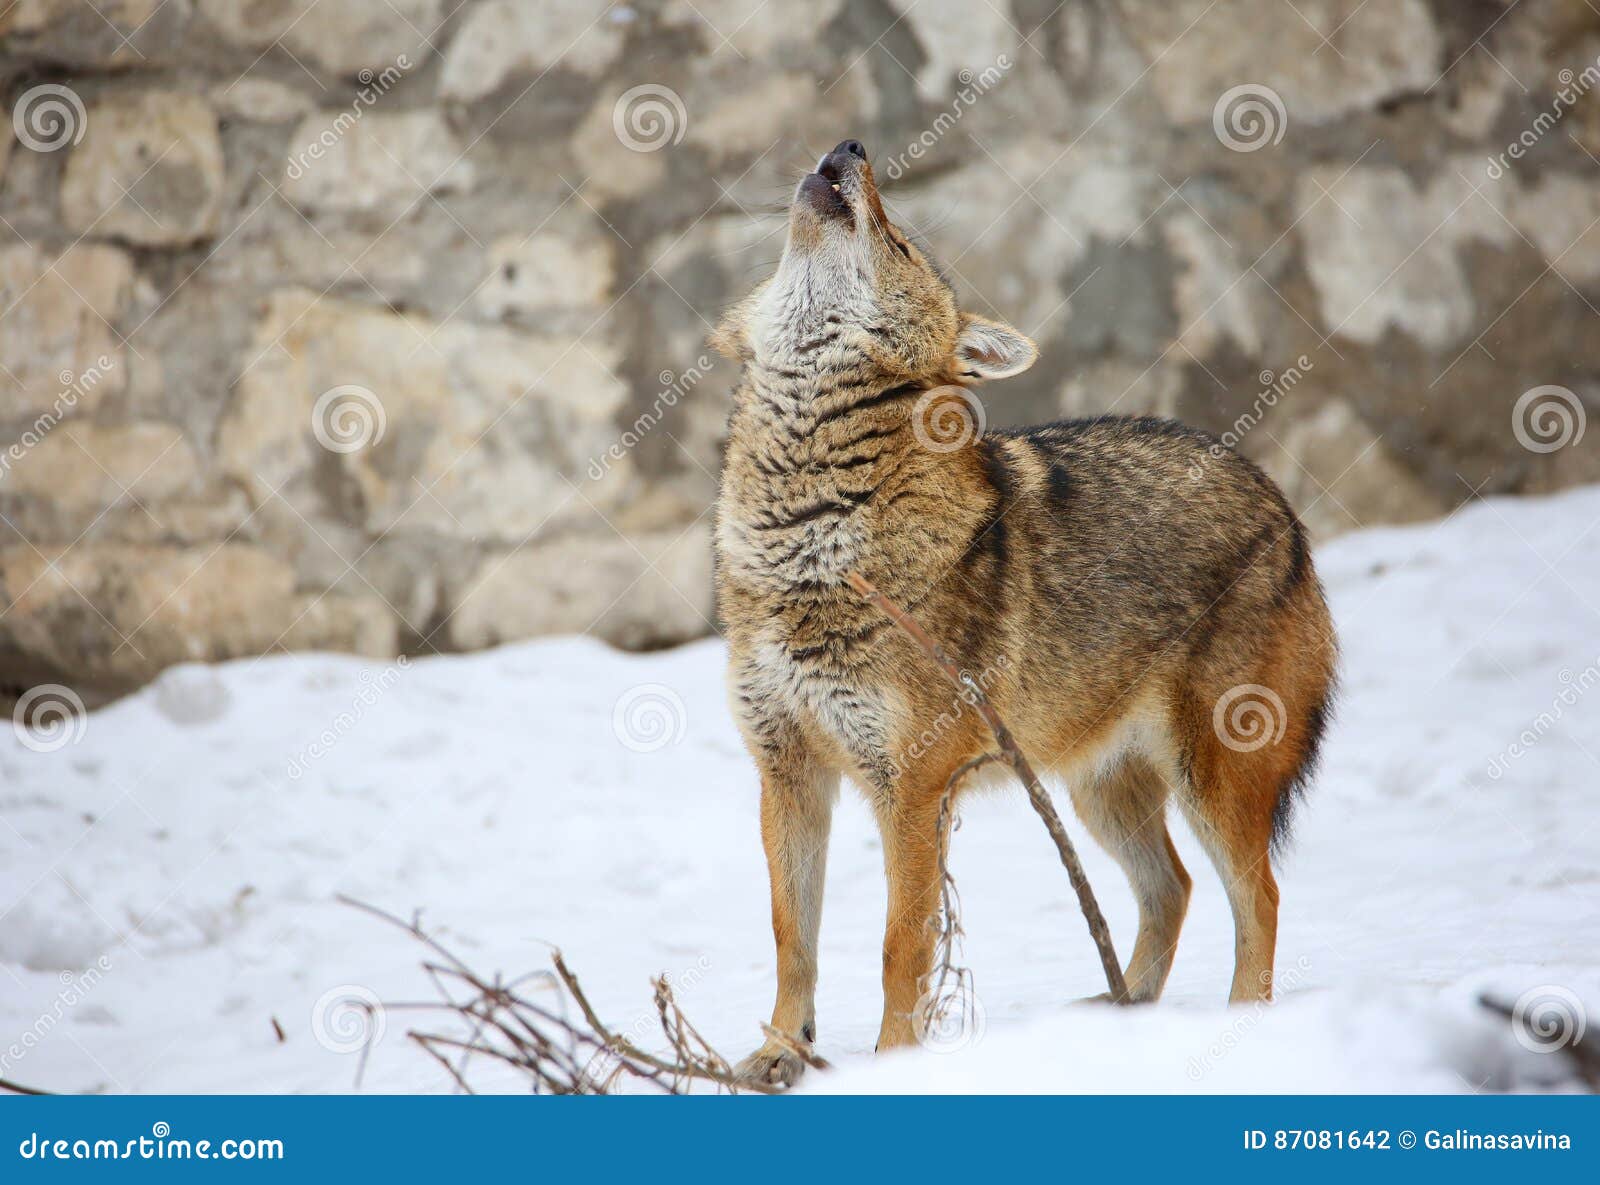 jackal or reed wolf. the jackal howls